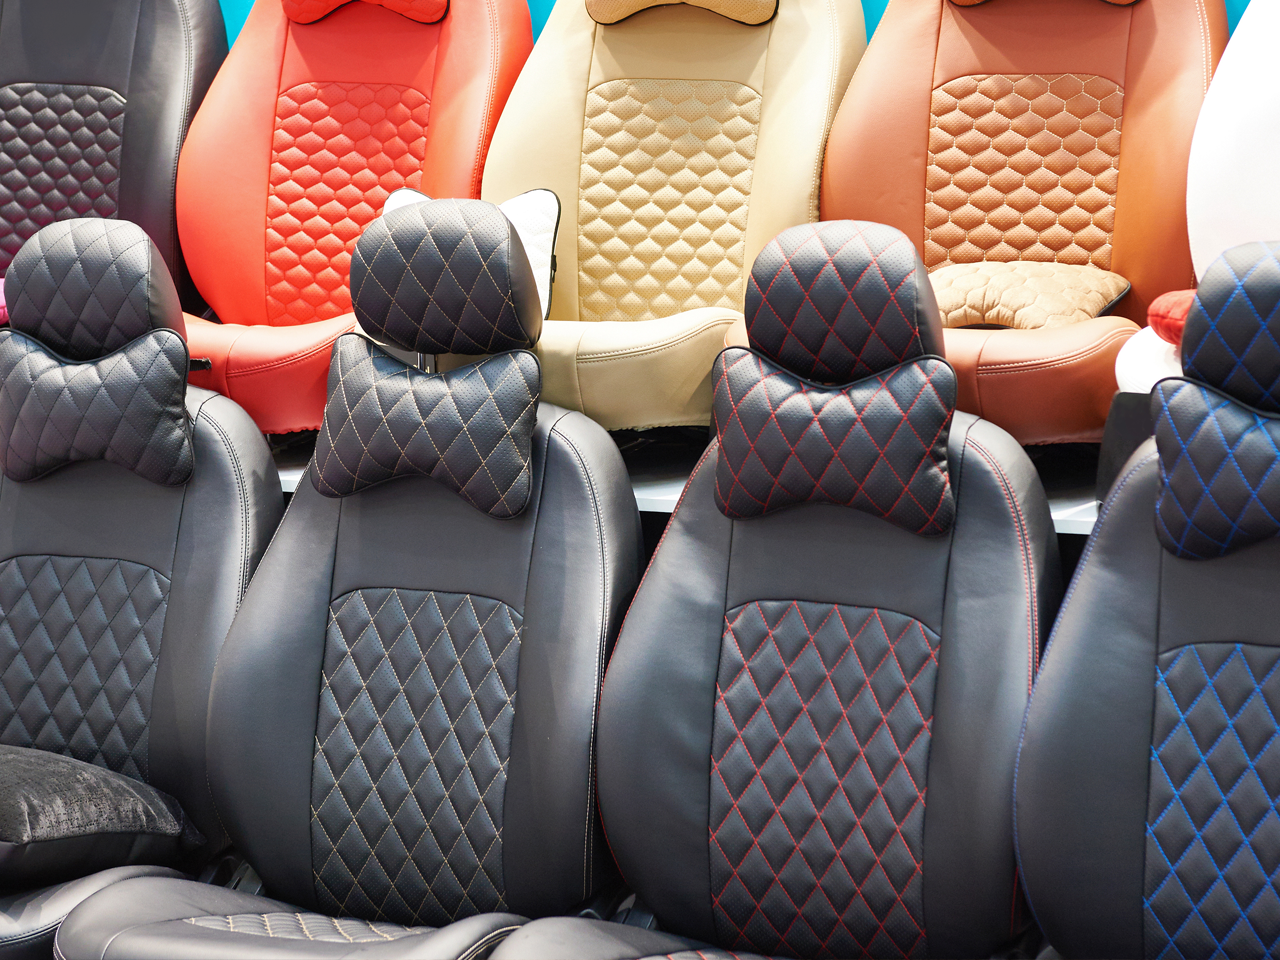 3 Pcs Universal Automotive Seat Covers Full Set masubons Car Seat Cushion Full Set Breathable Anti-Slip Car Seat Covers Cushions for Auto Supplies Interior Fit for SUV/Truck/Sedan Beige 